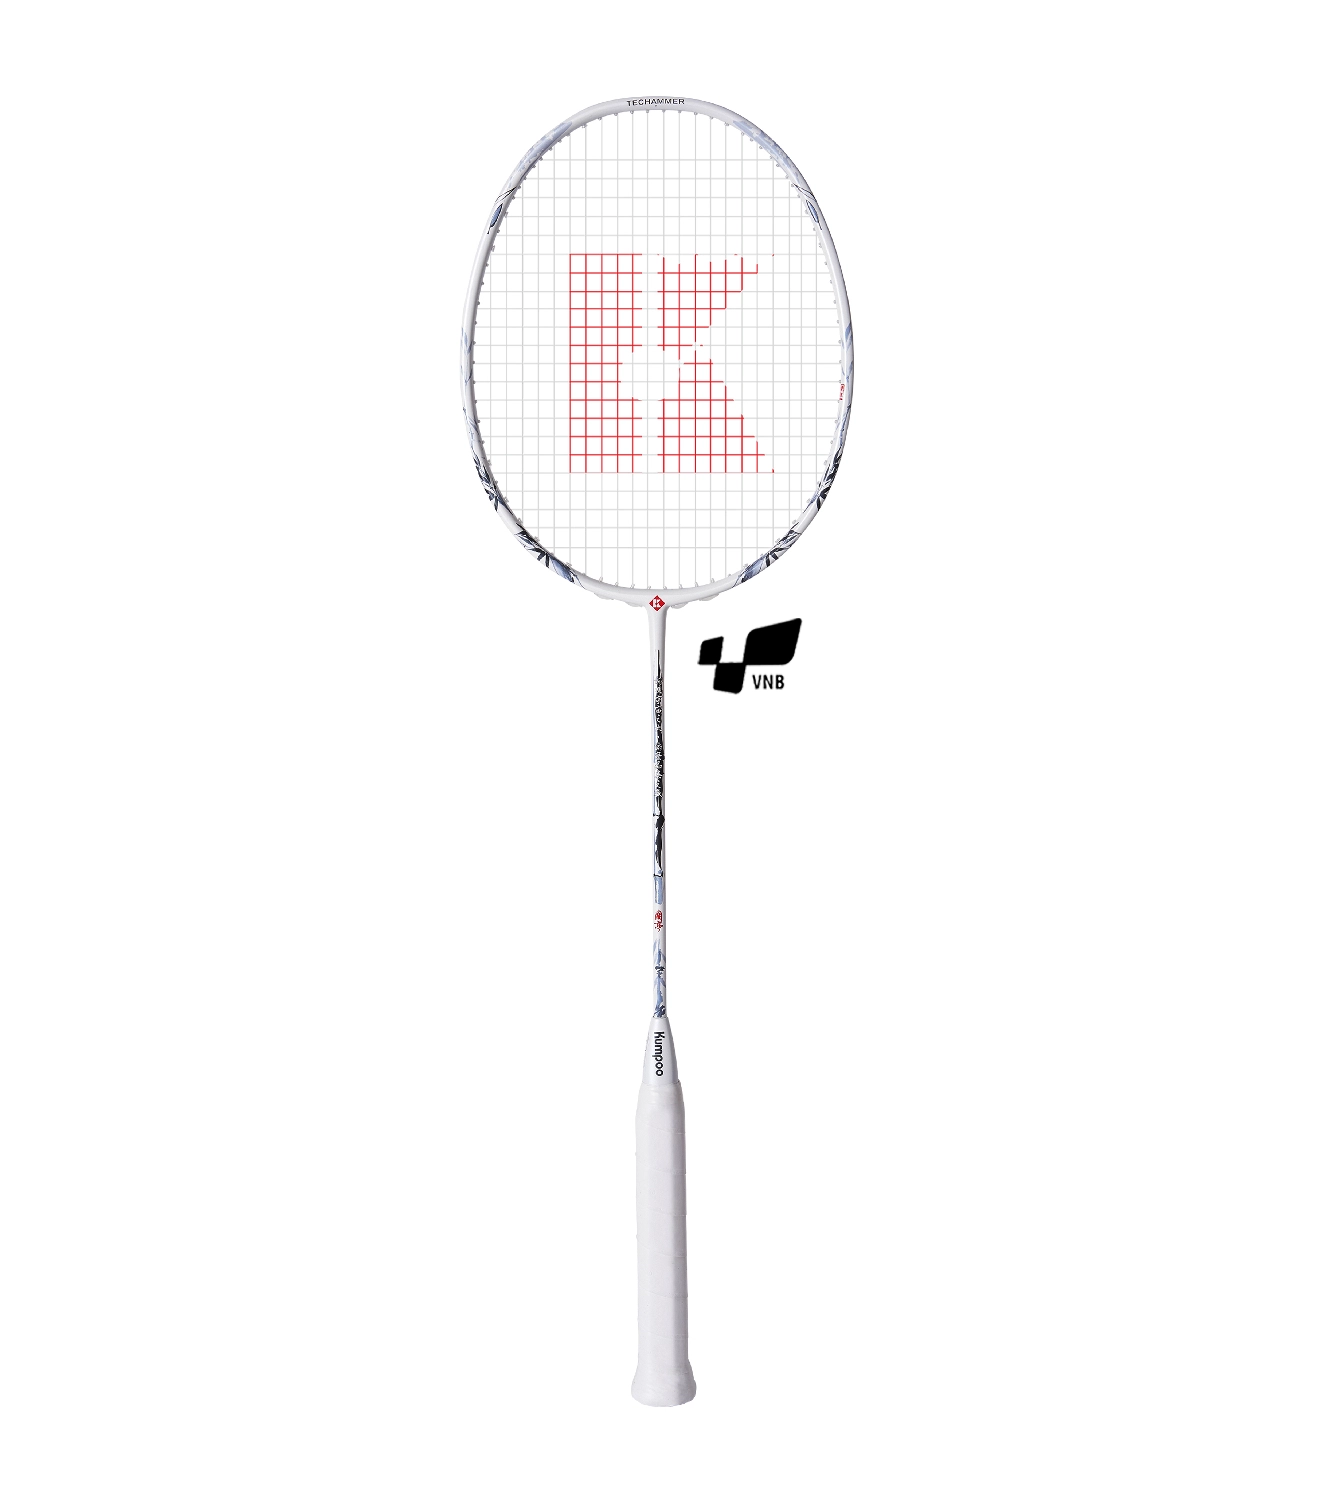 Combo mua vợt cầu lông Kumpoo Pines Tặng Vợt Kumpoo Lanting Túi Kumpoo K26S Đỏ	